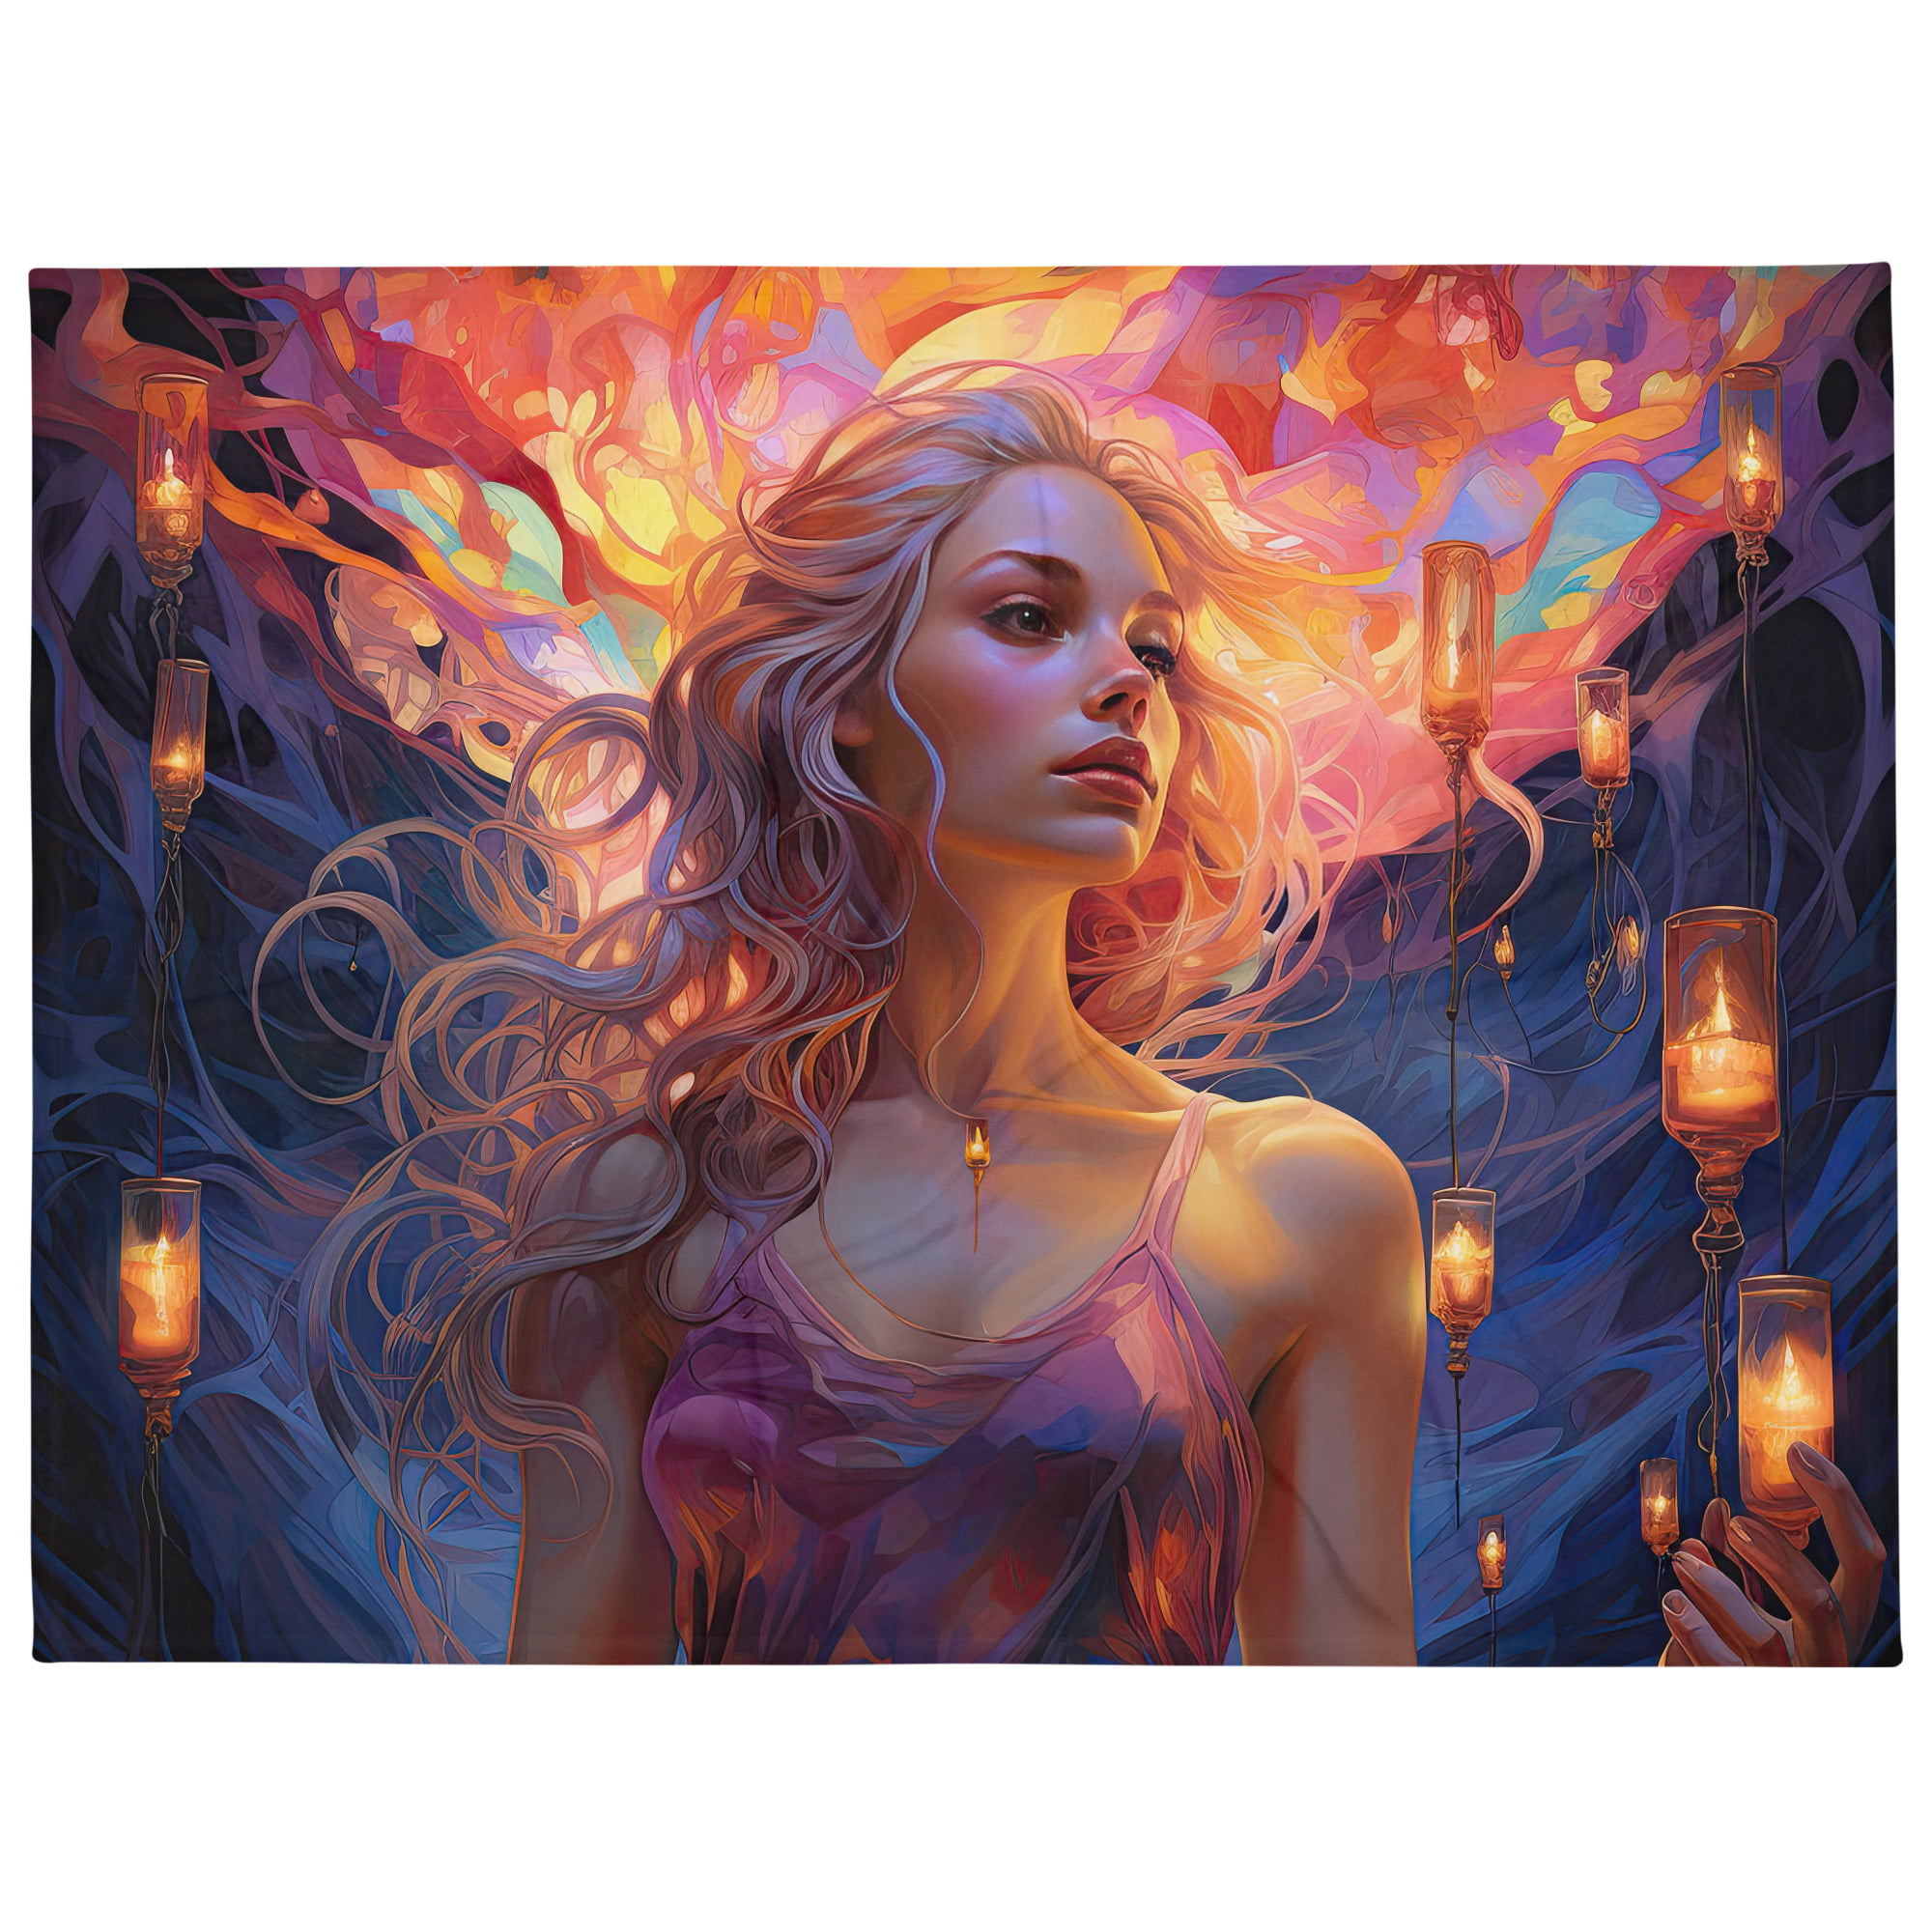 Lanterns of Light – Beautiful Throw Blanket – 60×80